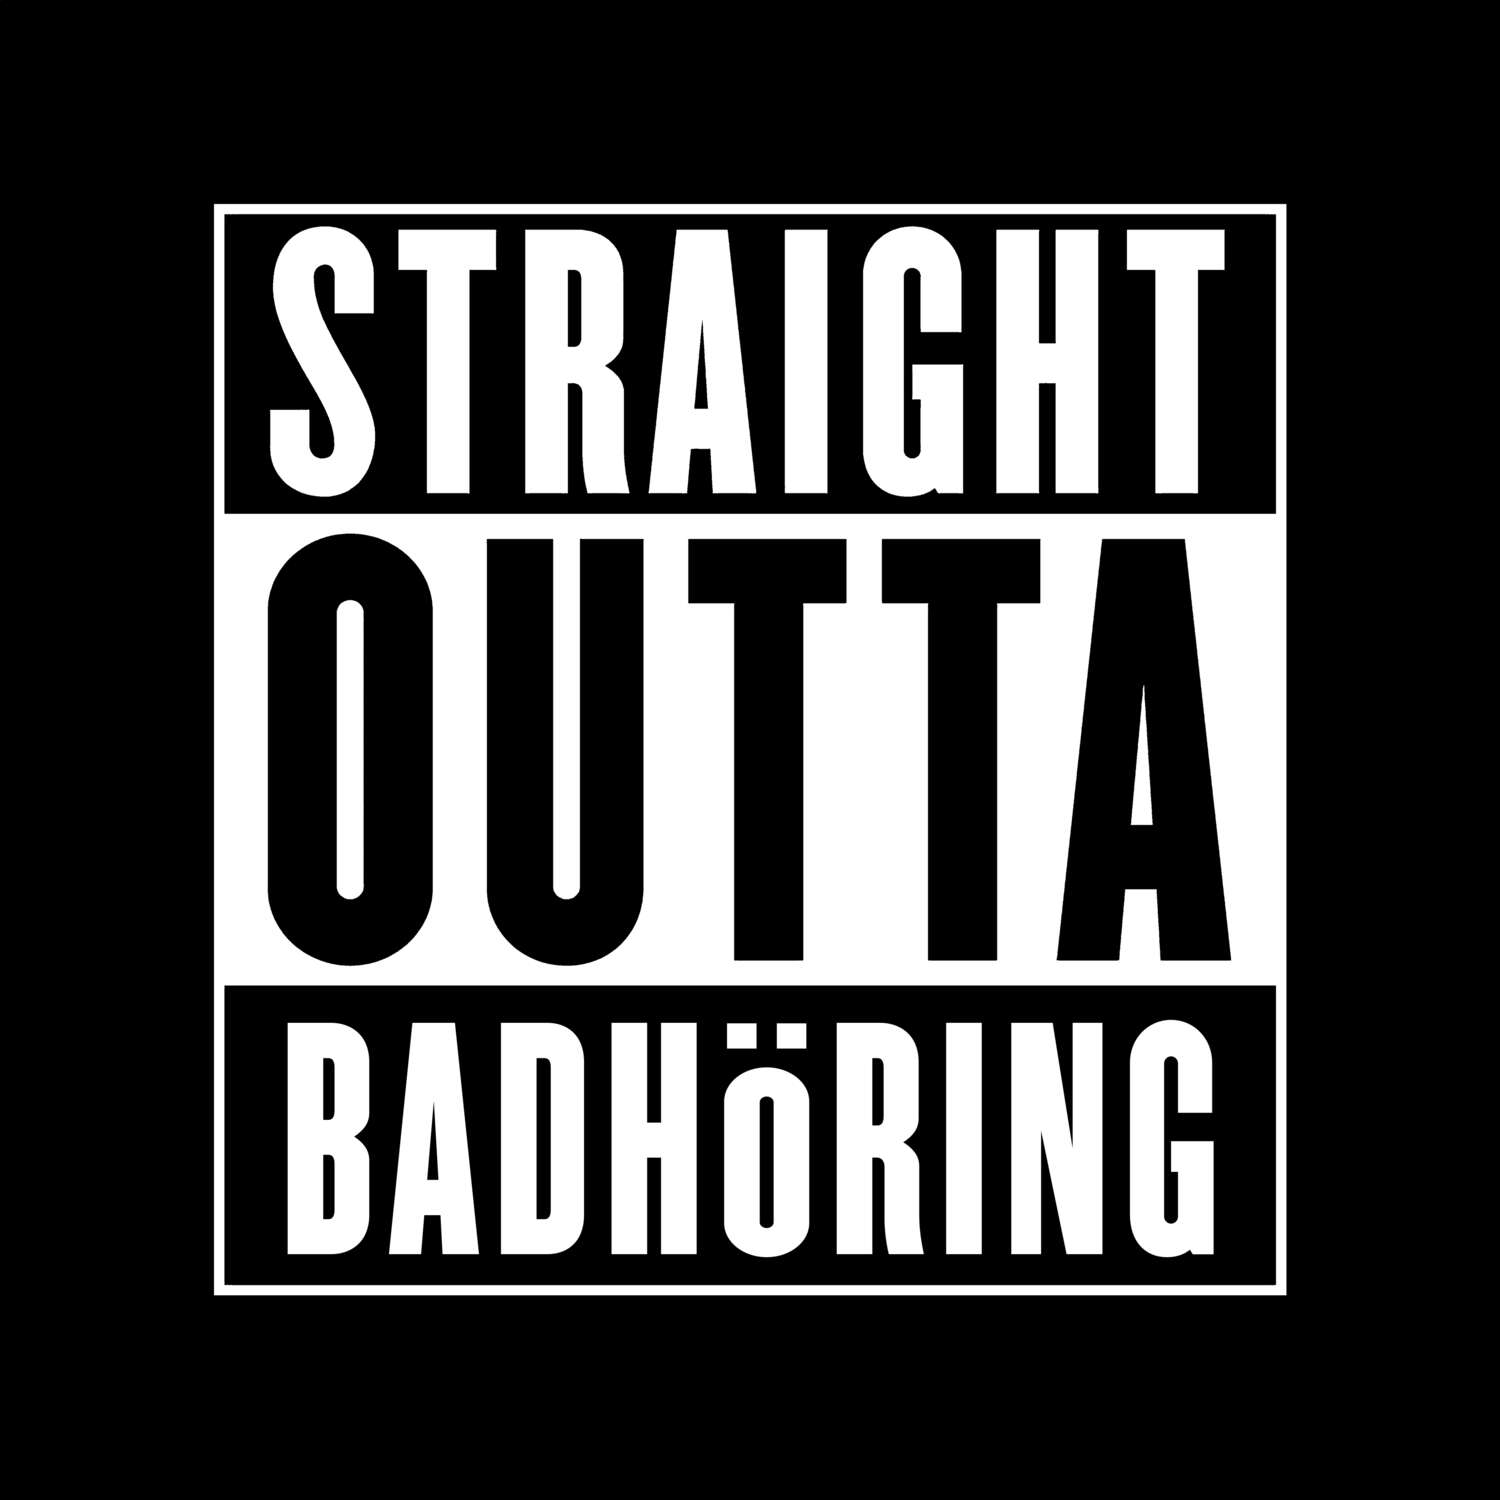 Badhöring T-Shirt »Straight Outta«